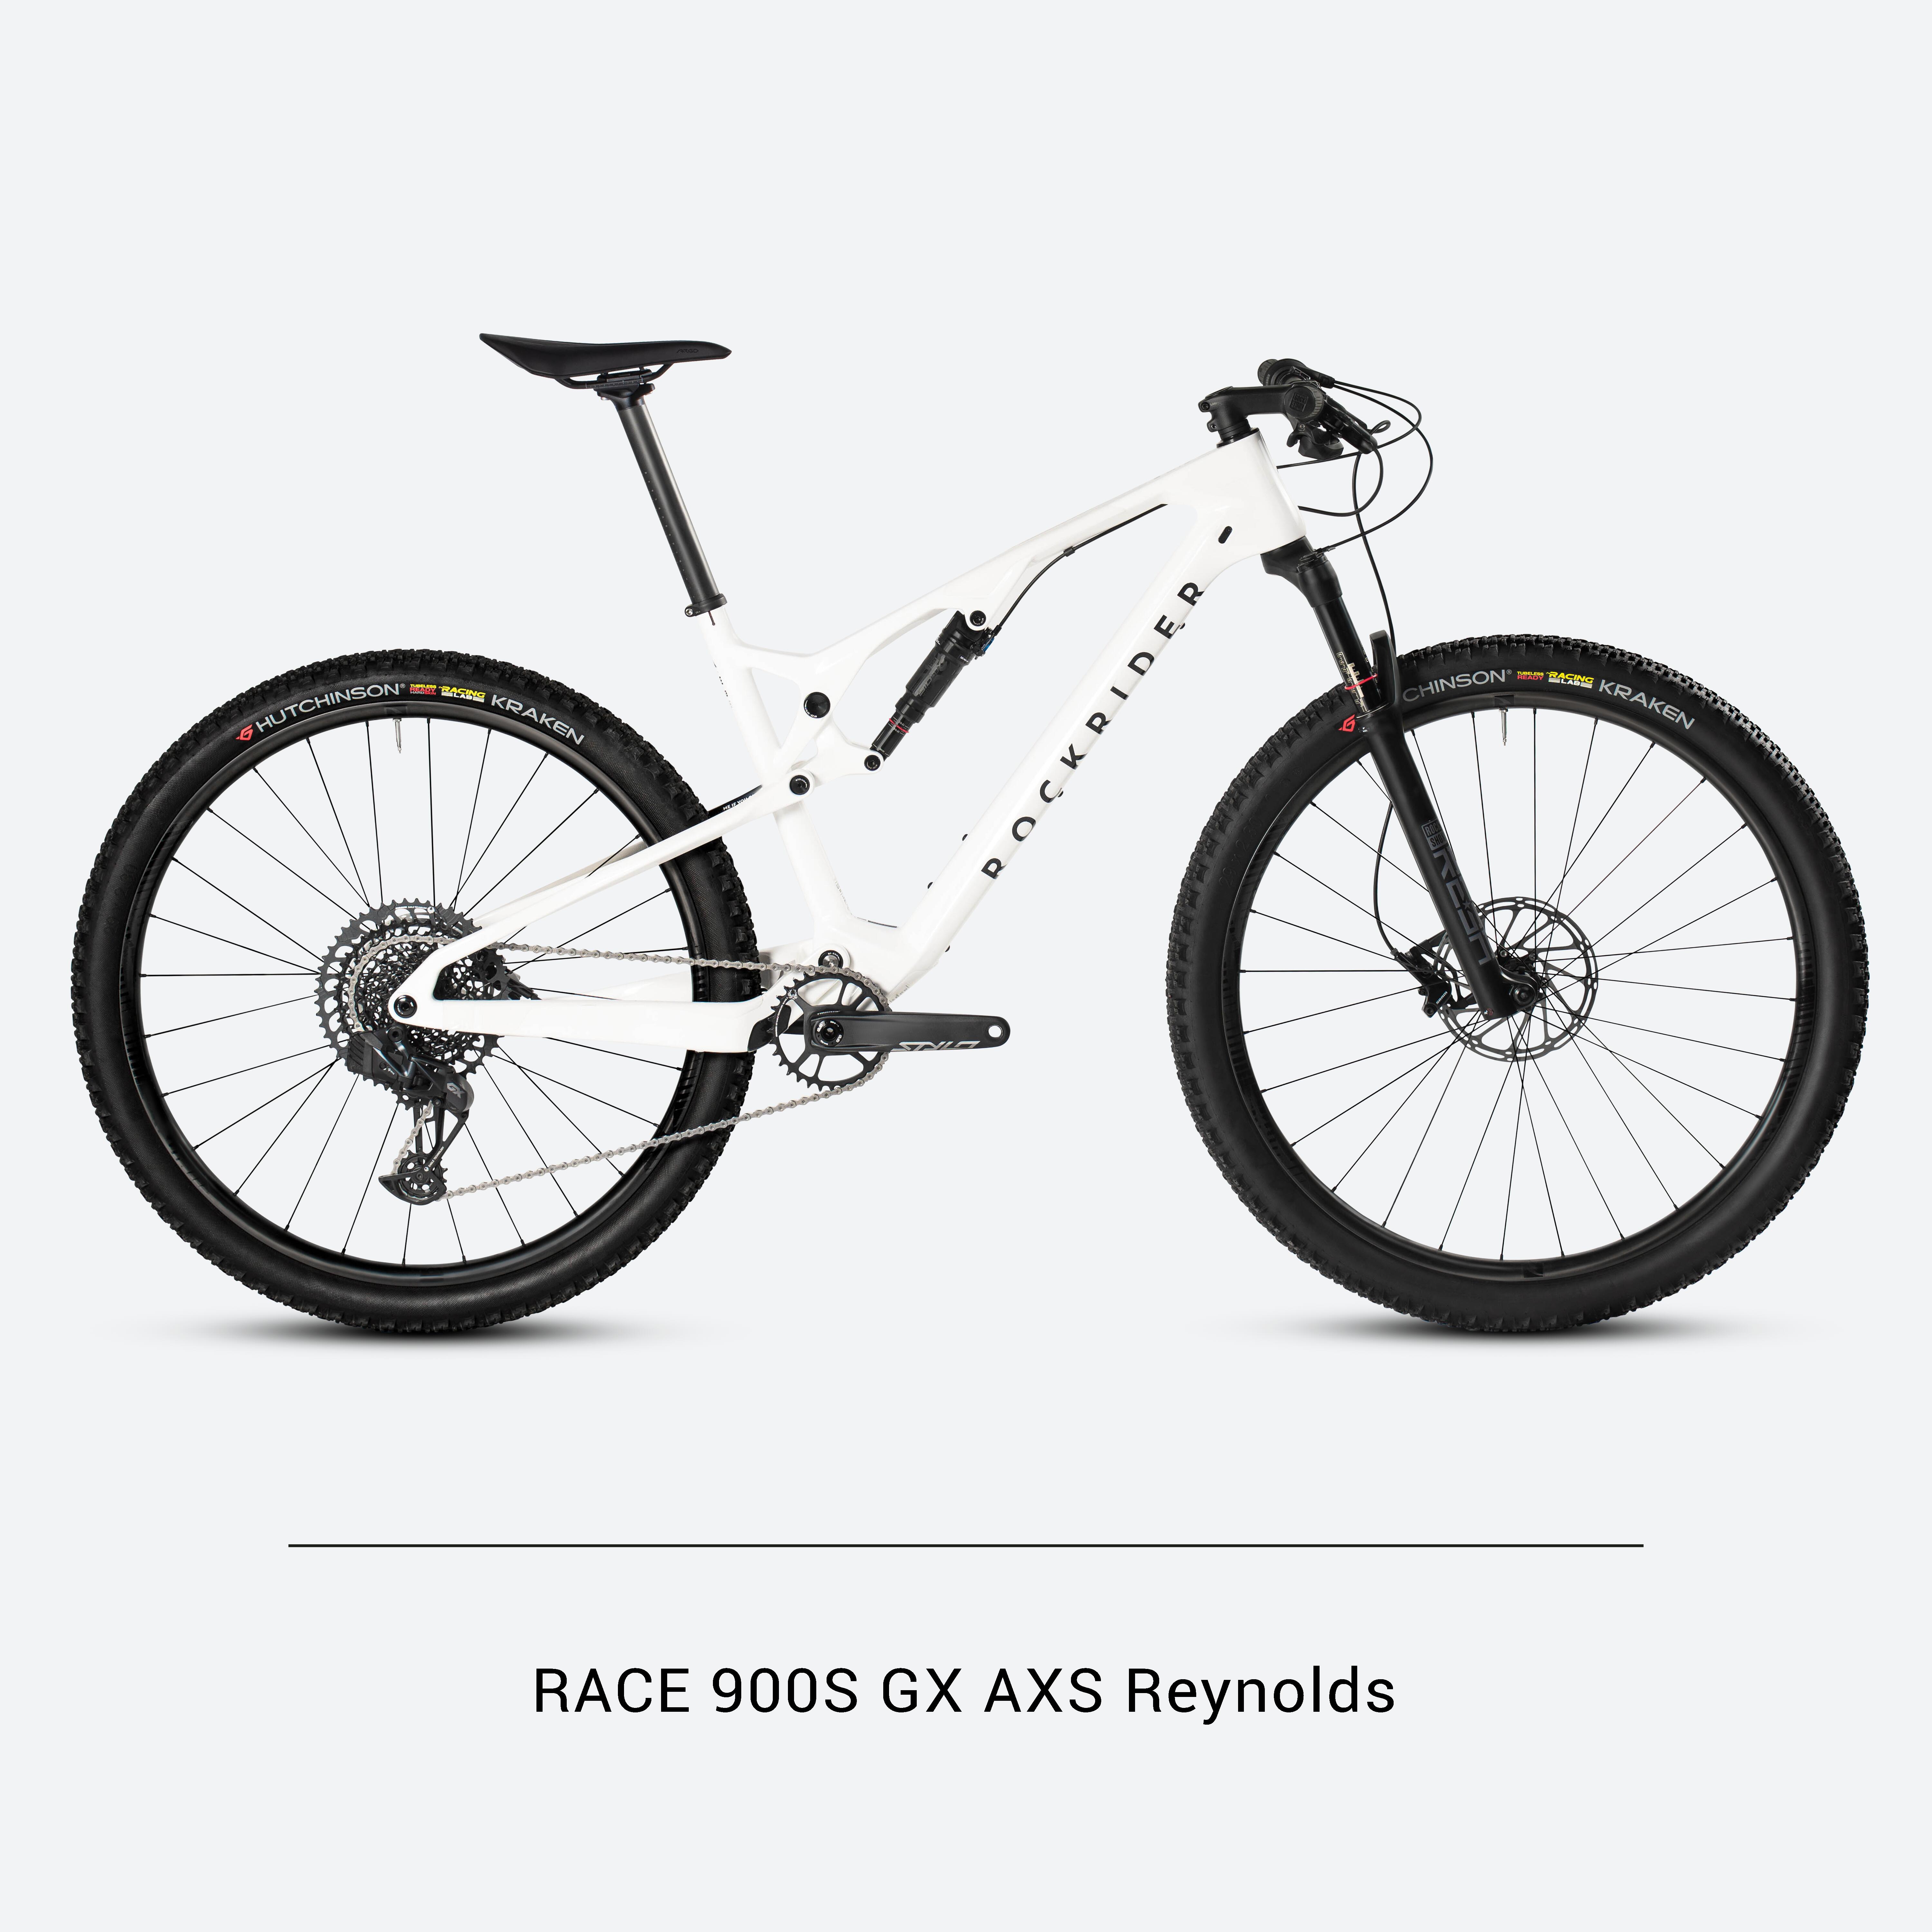 Bicicletă MTB cross country RACE 900S GX AXS, roți Reynolds, cadru carbon 900S